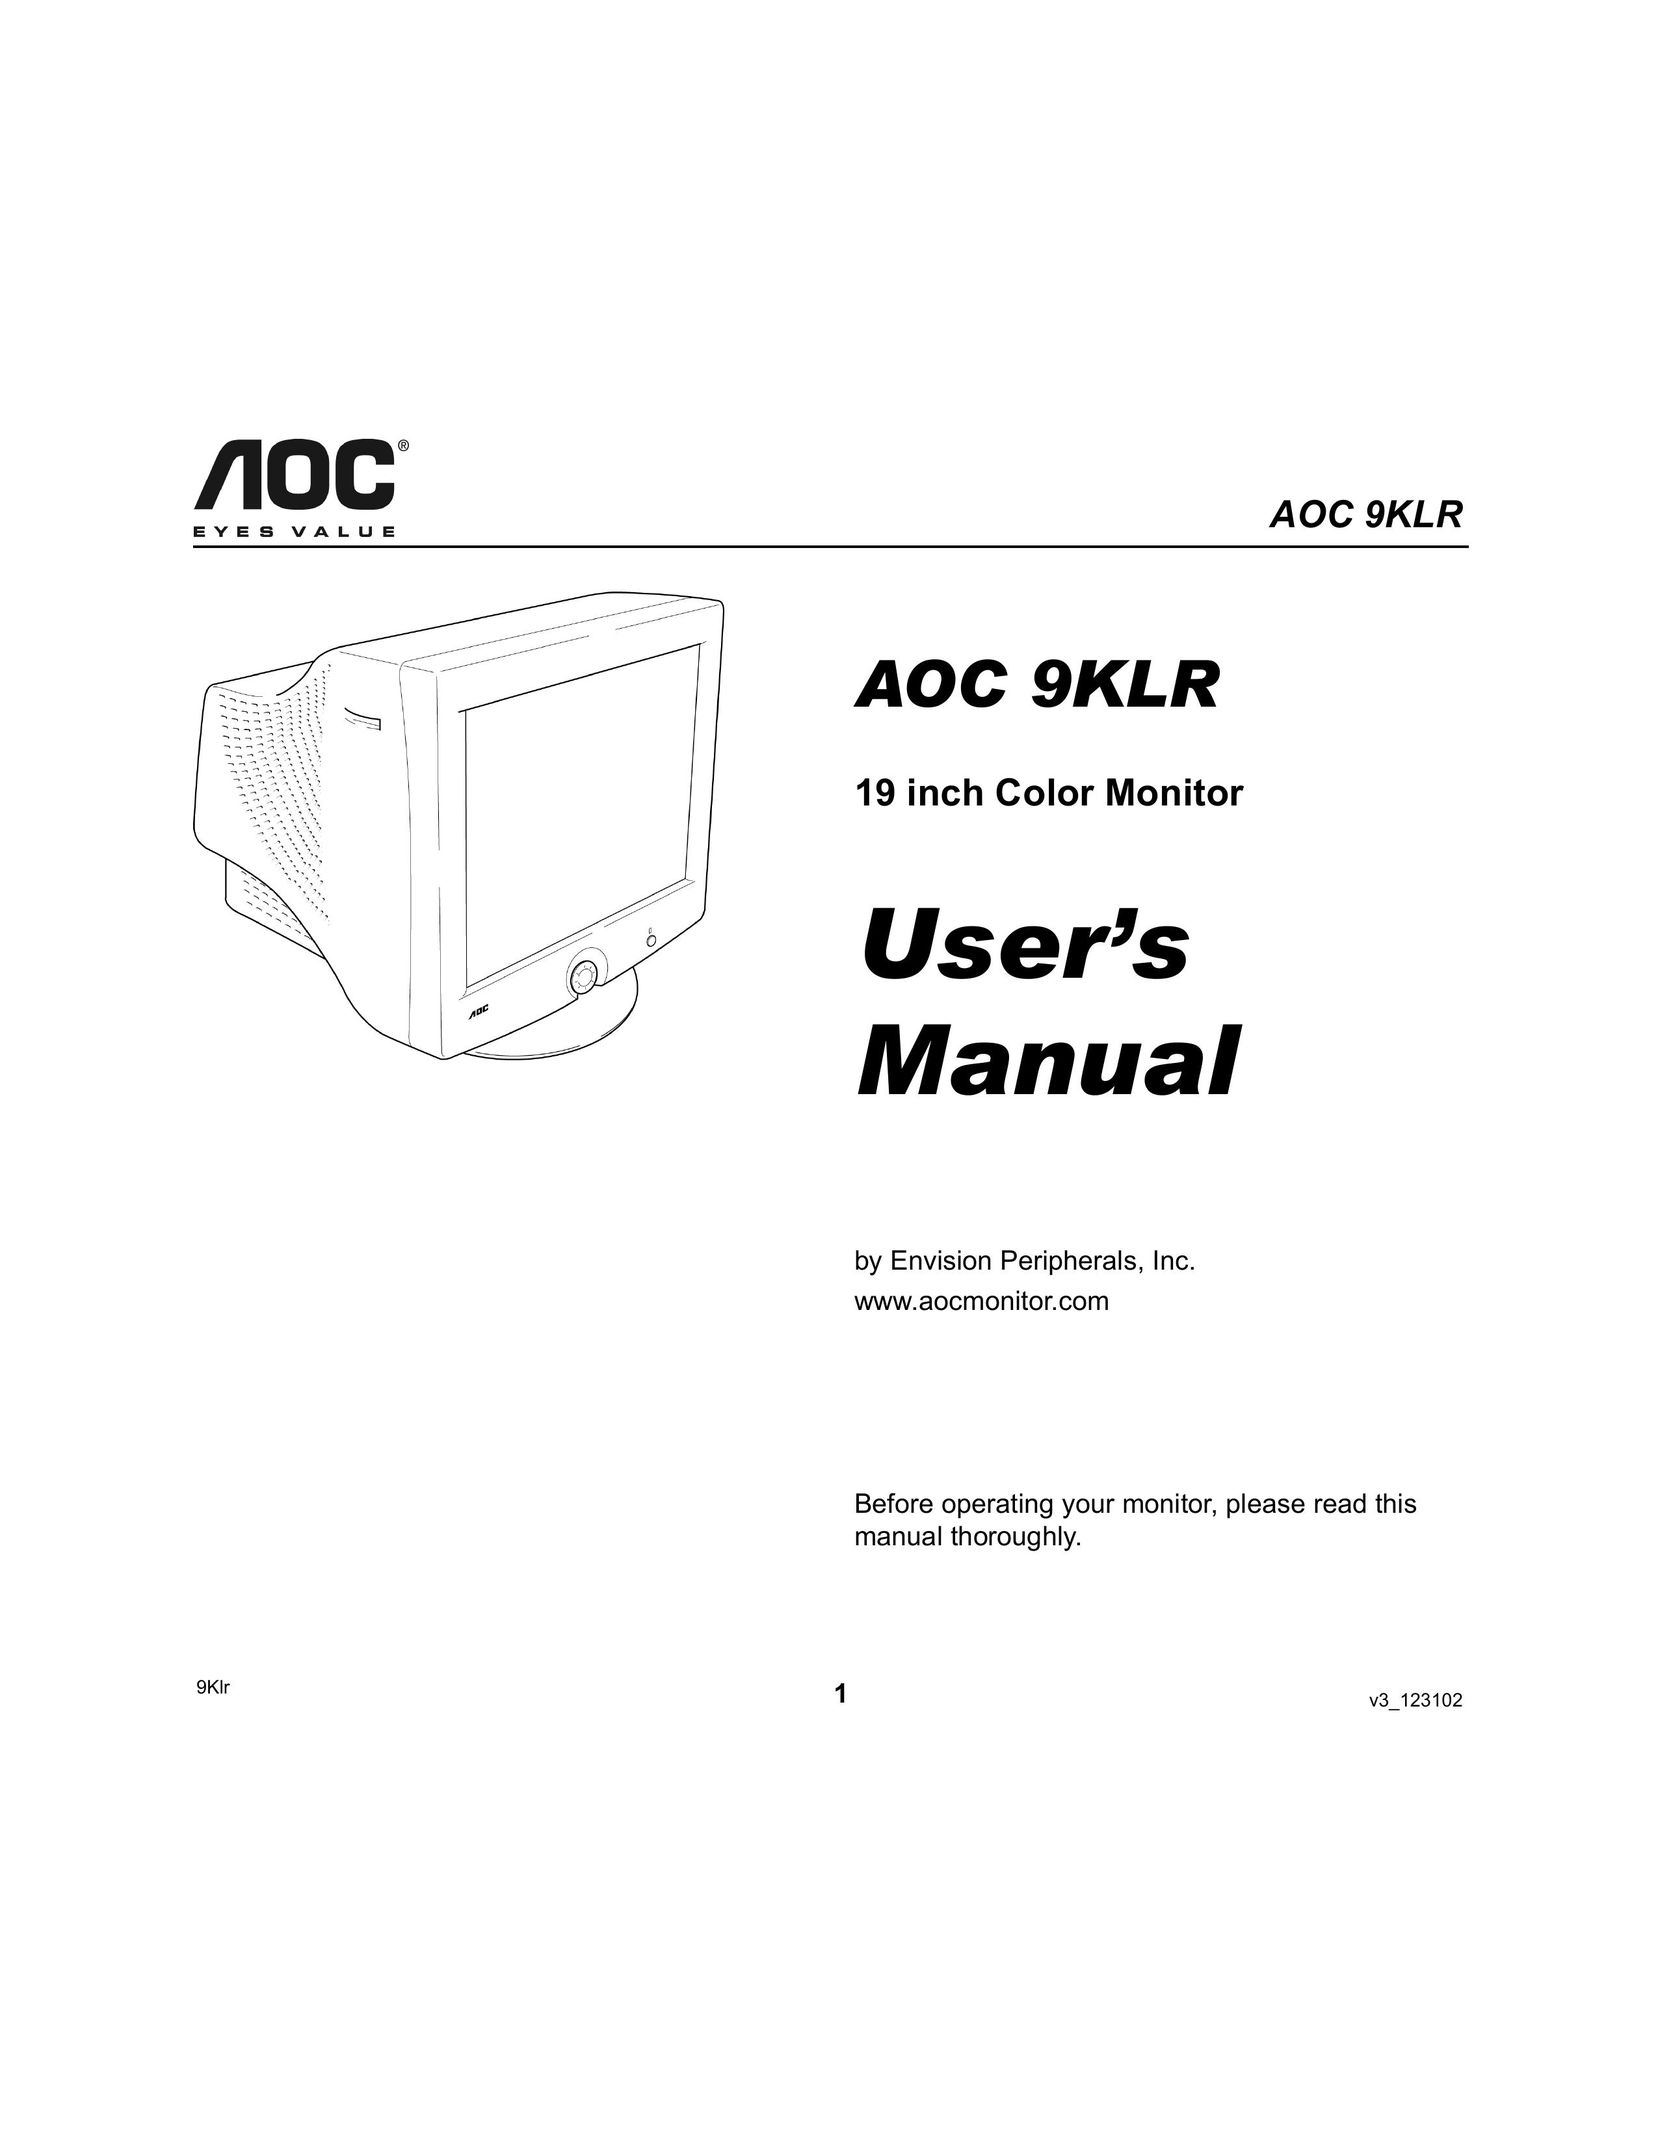 Envision Peripherals AOC 9KLR Computer Monitor User Manual